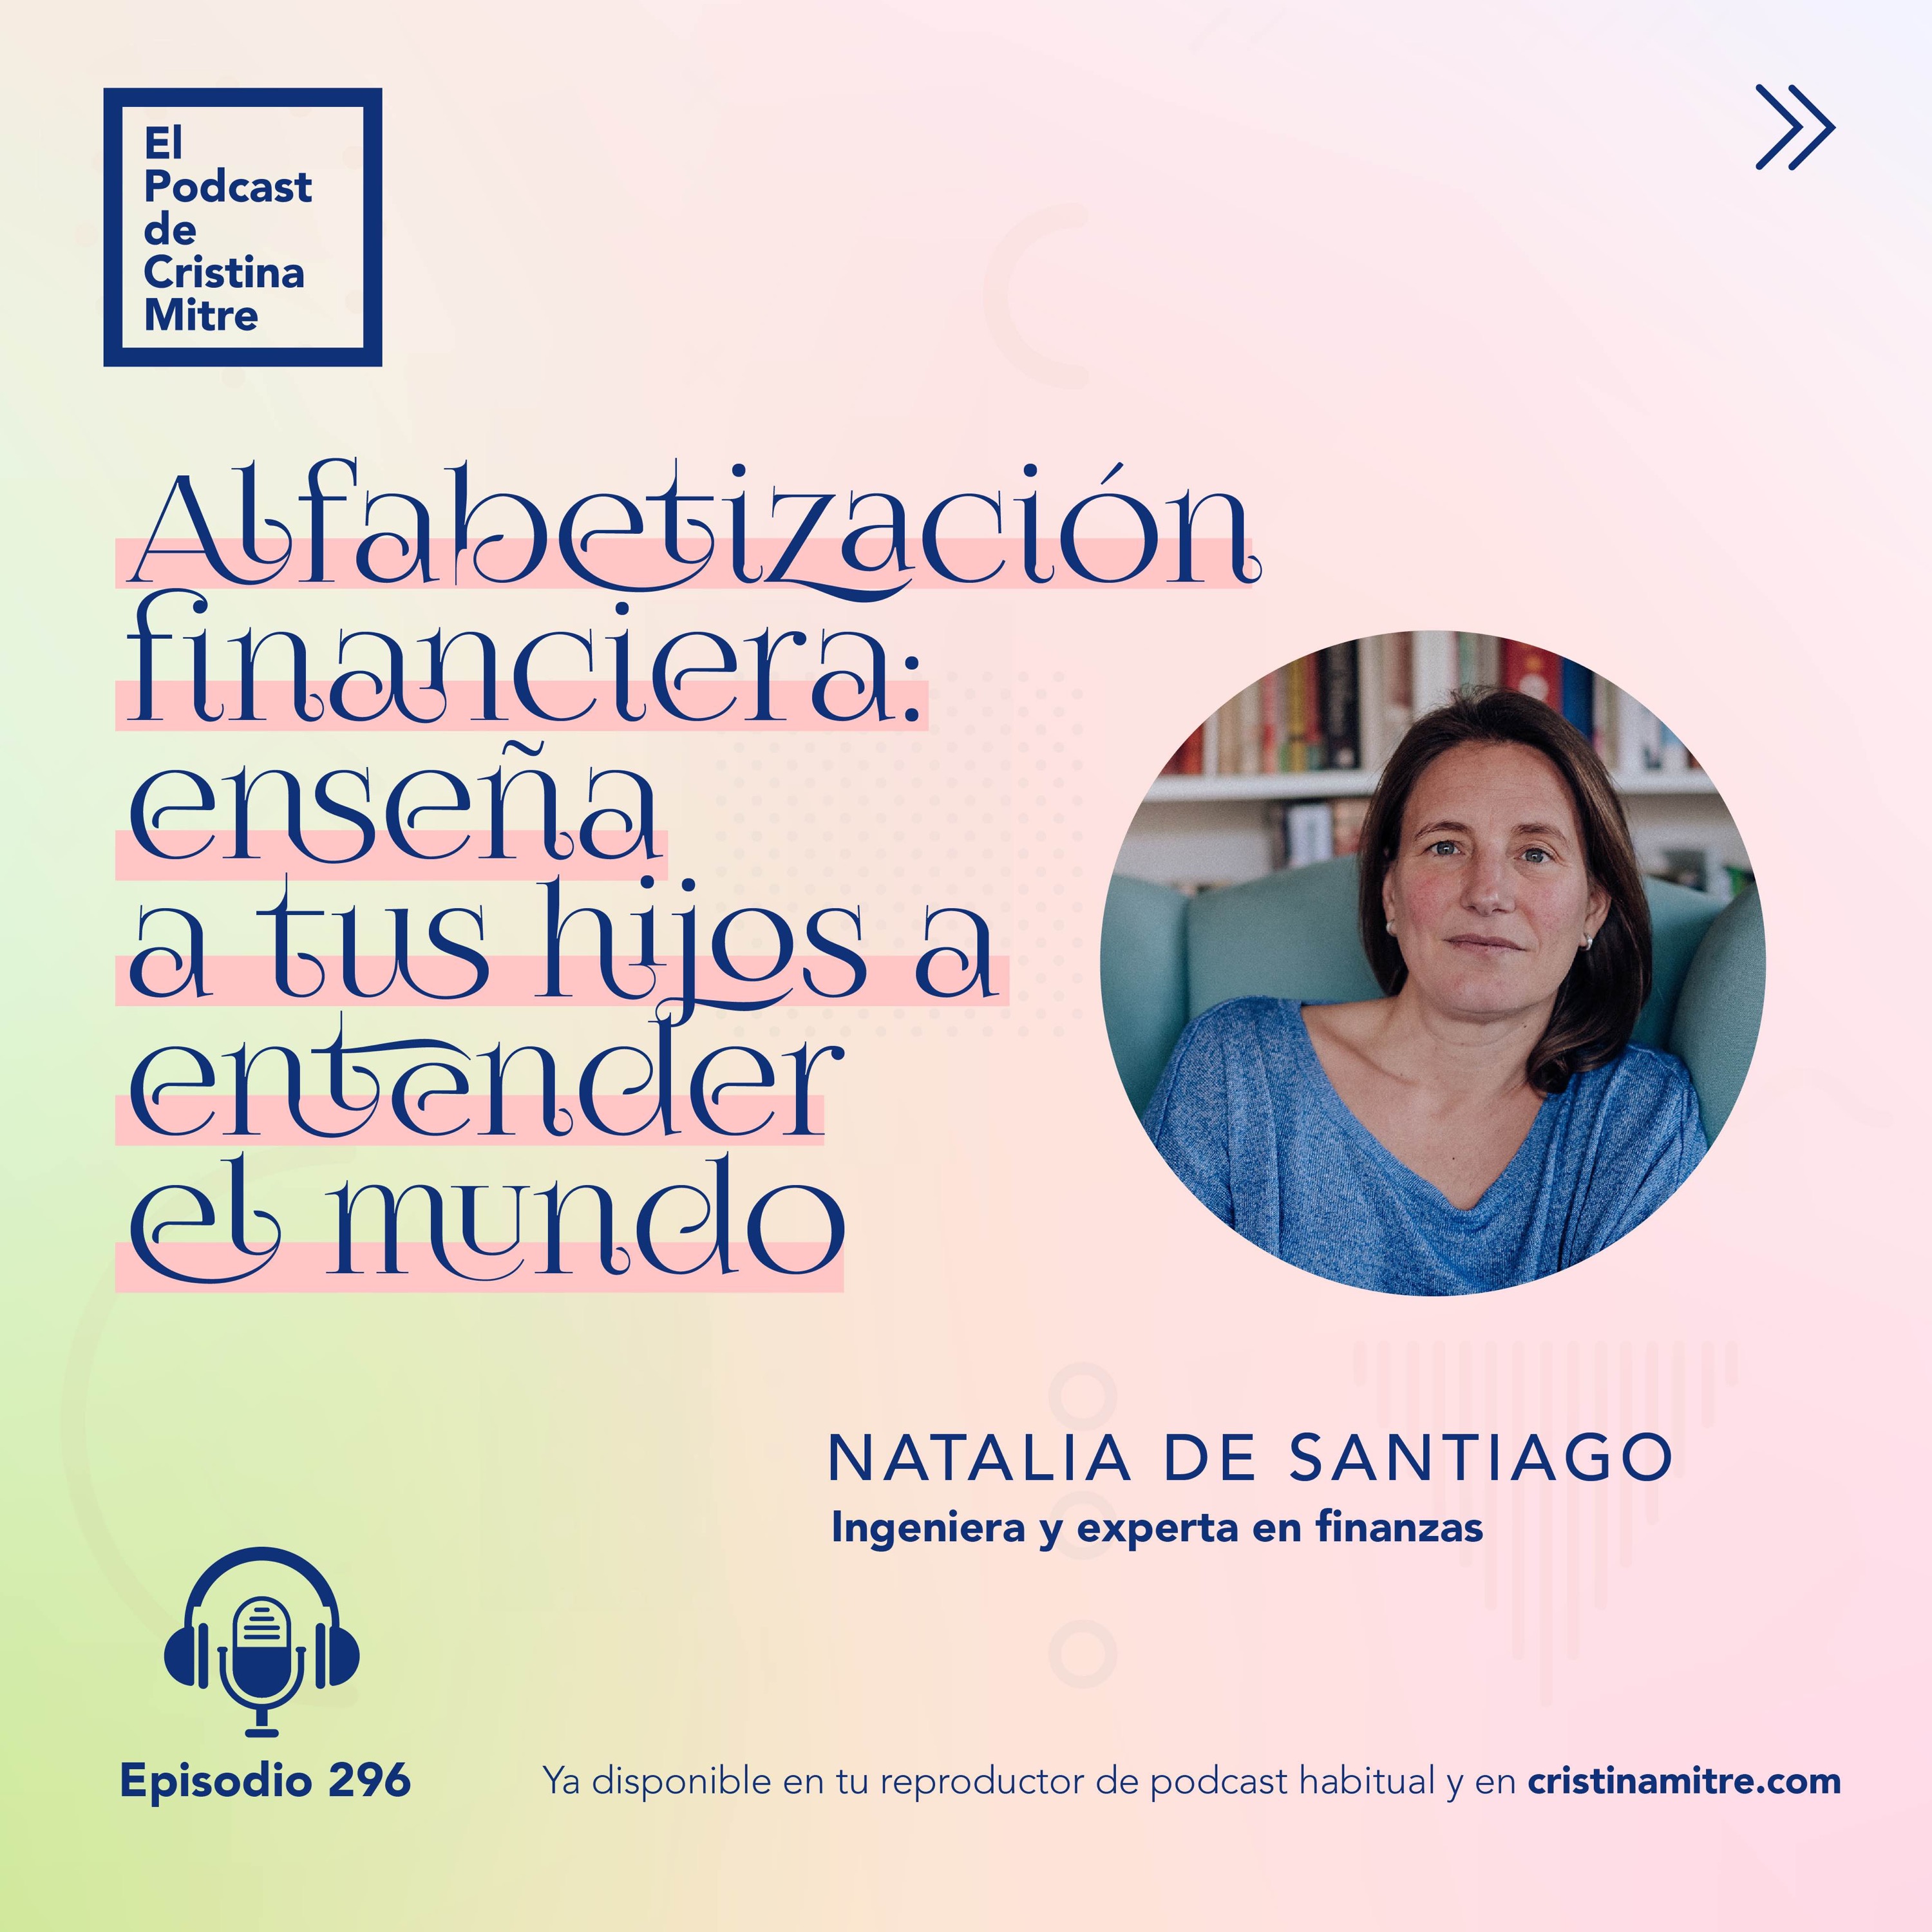 Stream episode Entrevistas Consalud - Lucia Mi Pediatra by ConSalud  Podcasts podcast